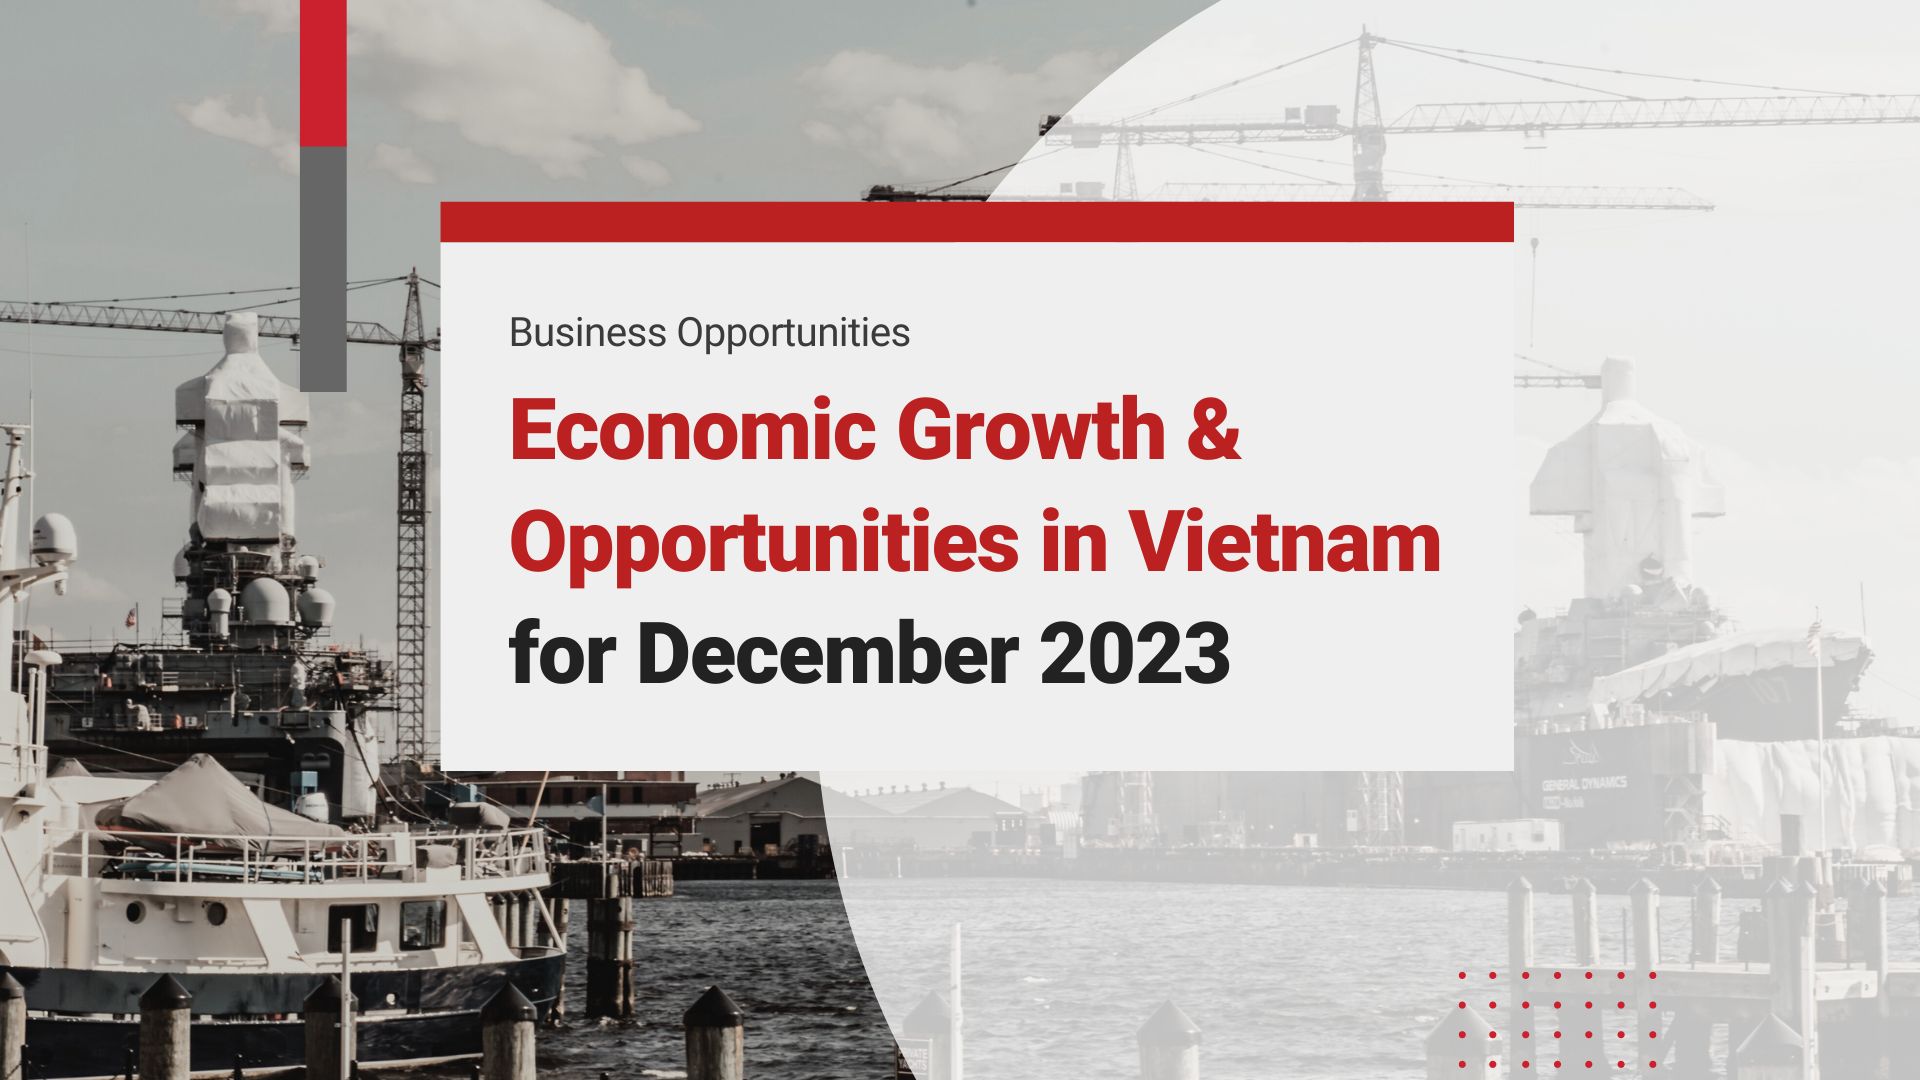 Economic Growth & Opportunities in Vietnam for December 2023